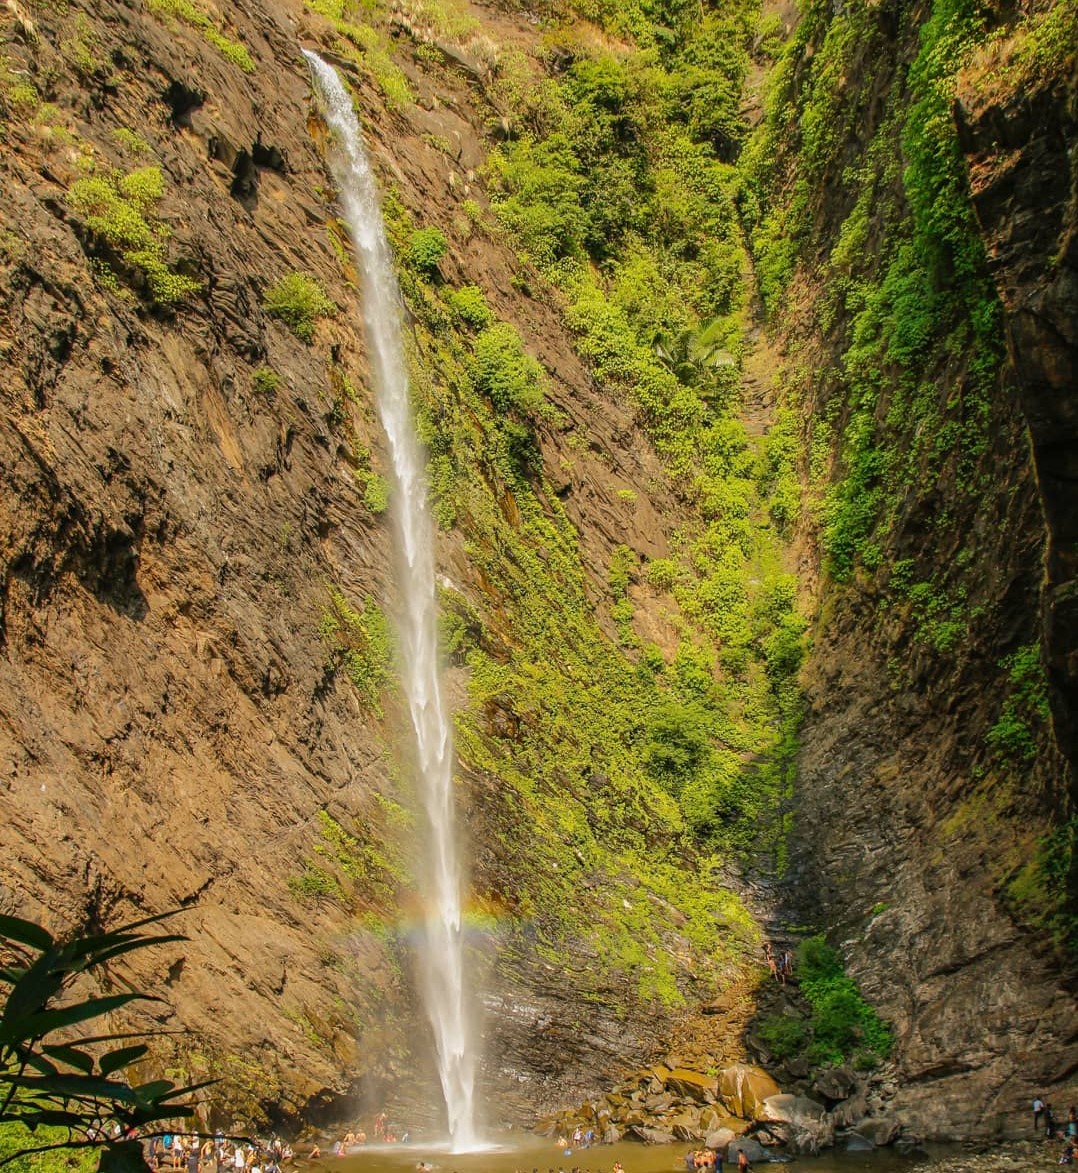 Koodlu Theertha Falls near Agumbe